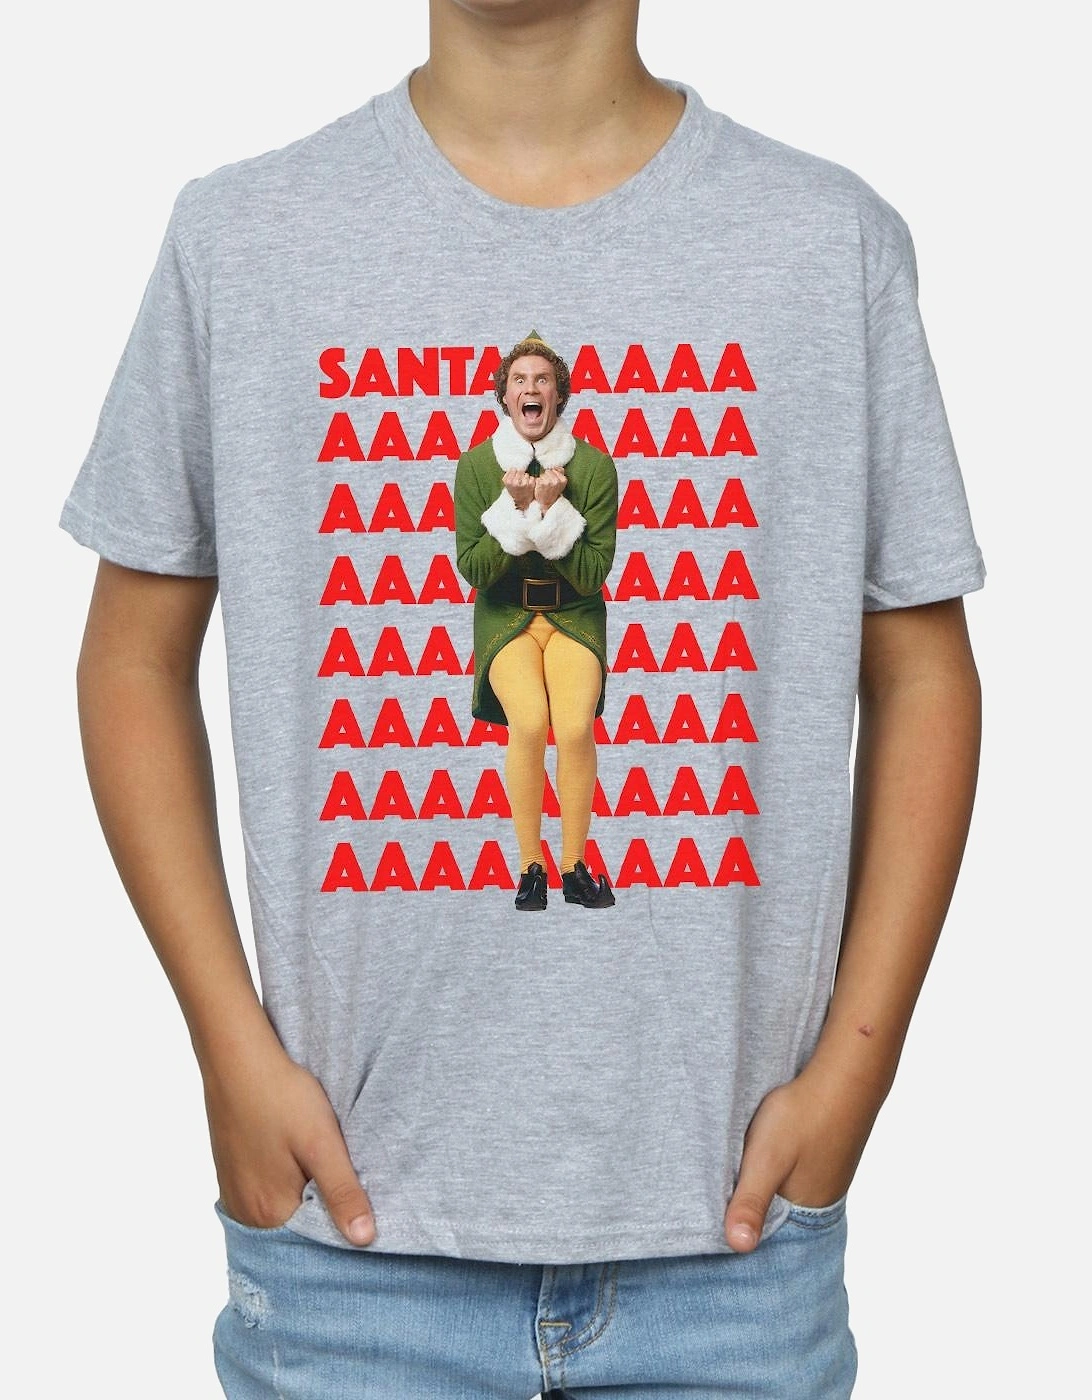 Boys Buddy Santa Scream T-Shirt